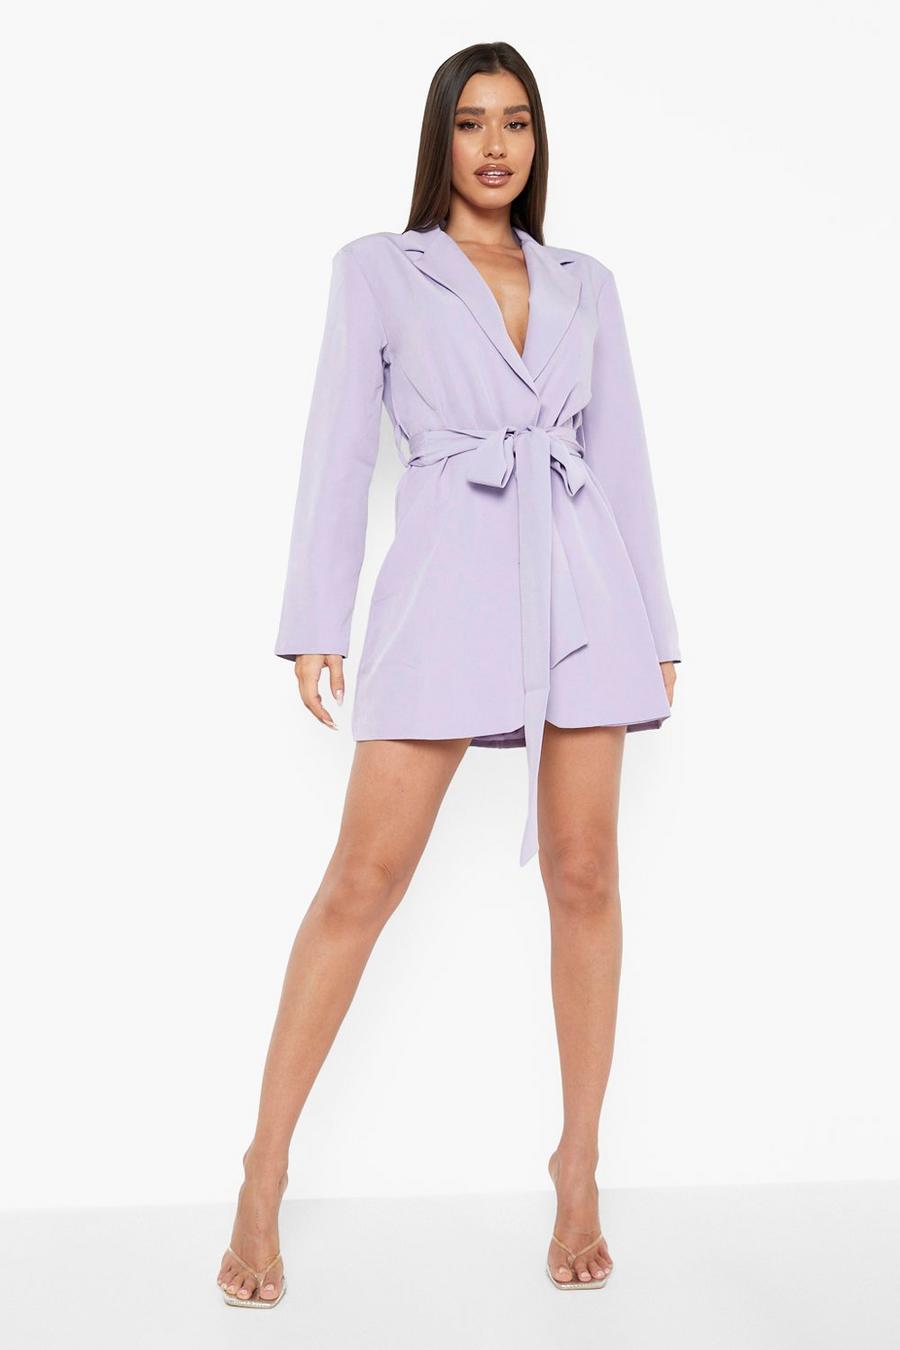 Robe blazer nouée à la taille, Lilac violet